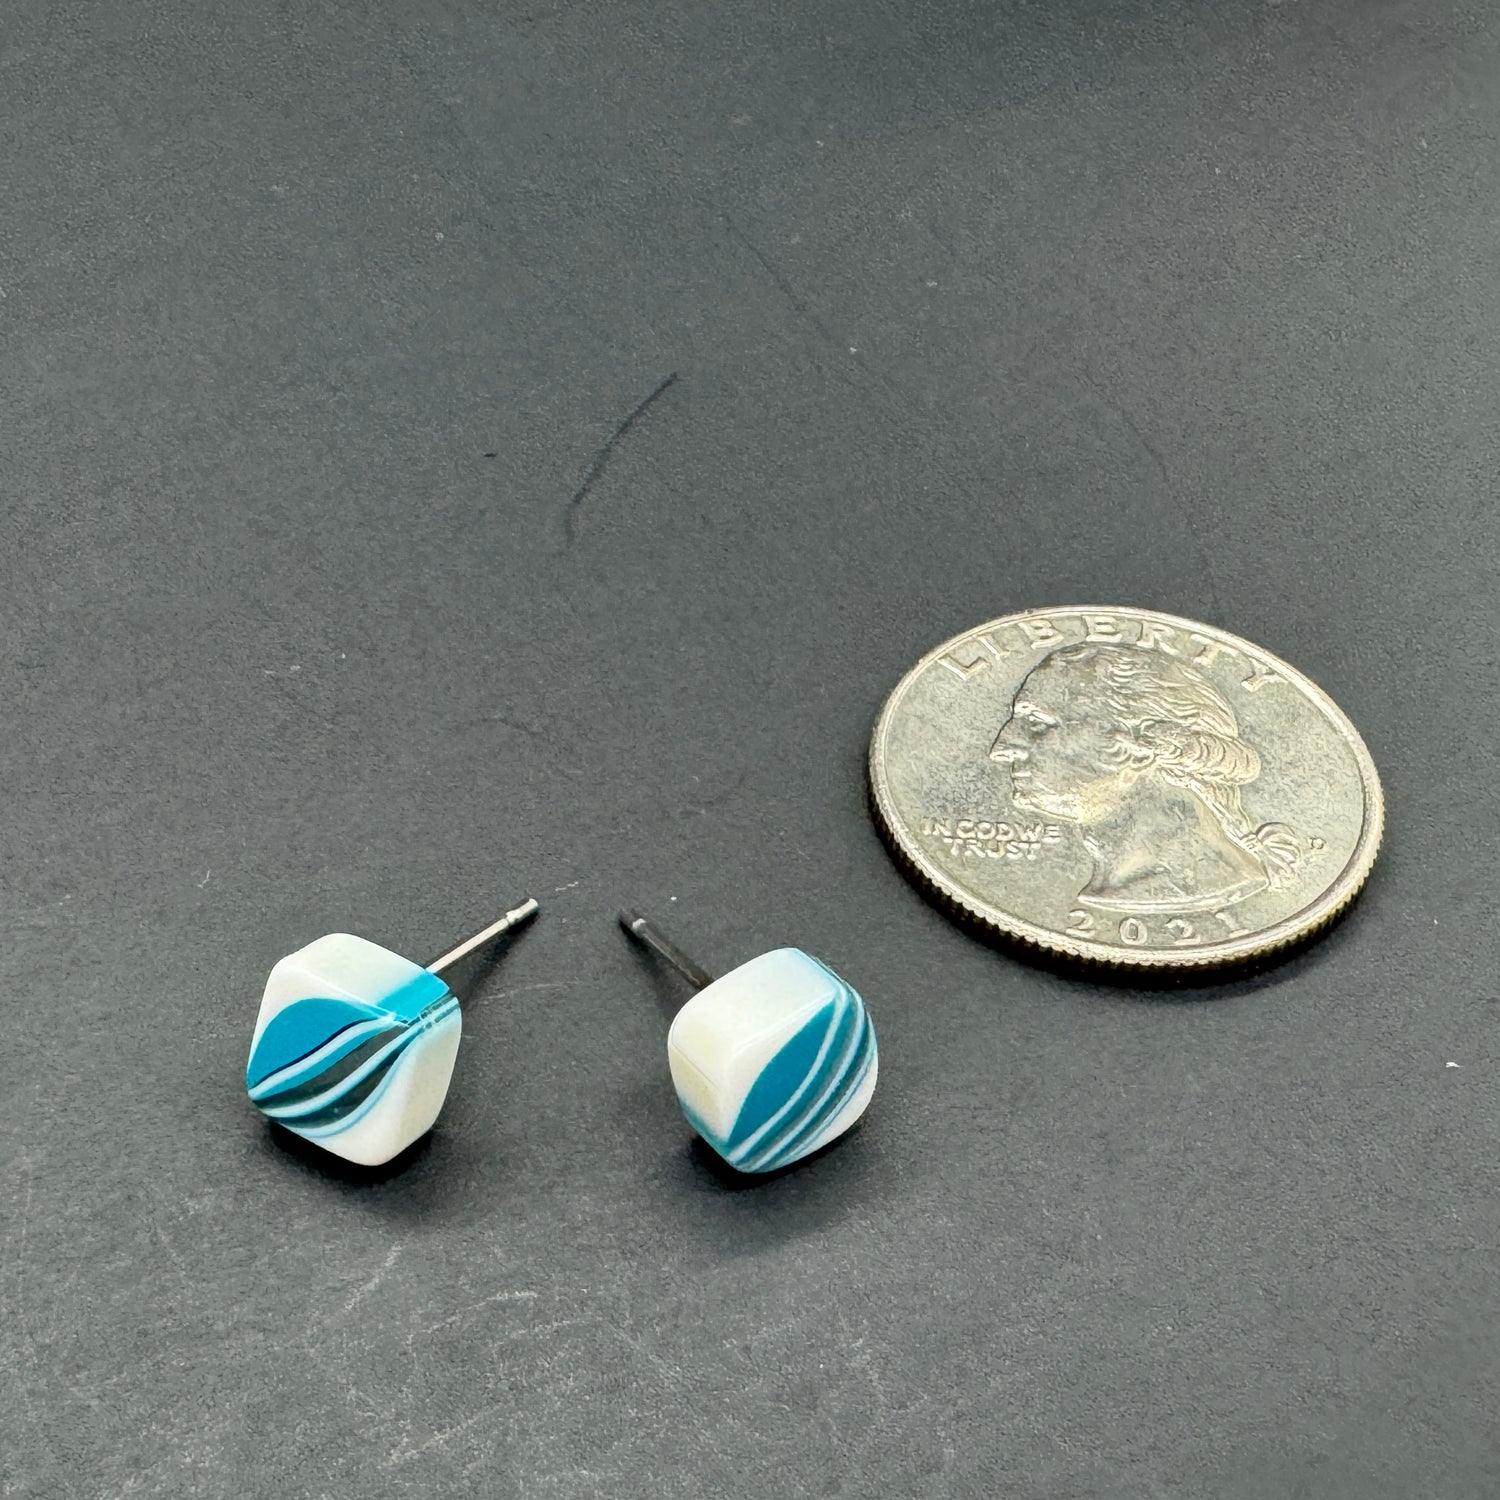 best plastics vintage blue stripe stud earrings next to quarter for size reference